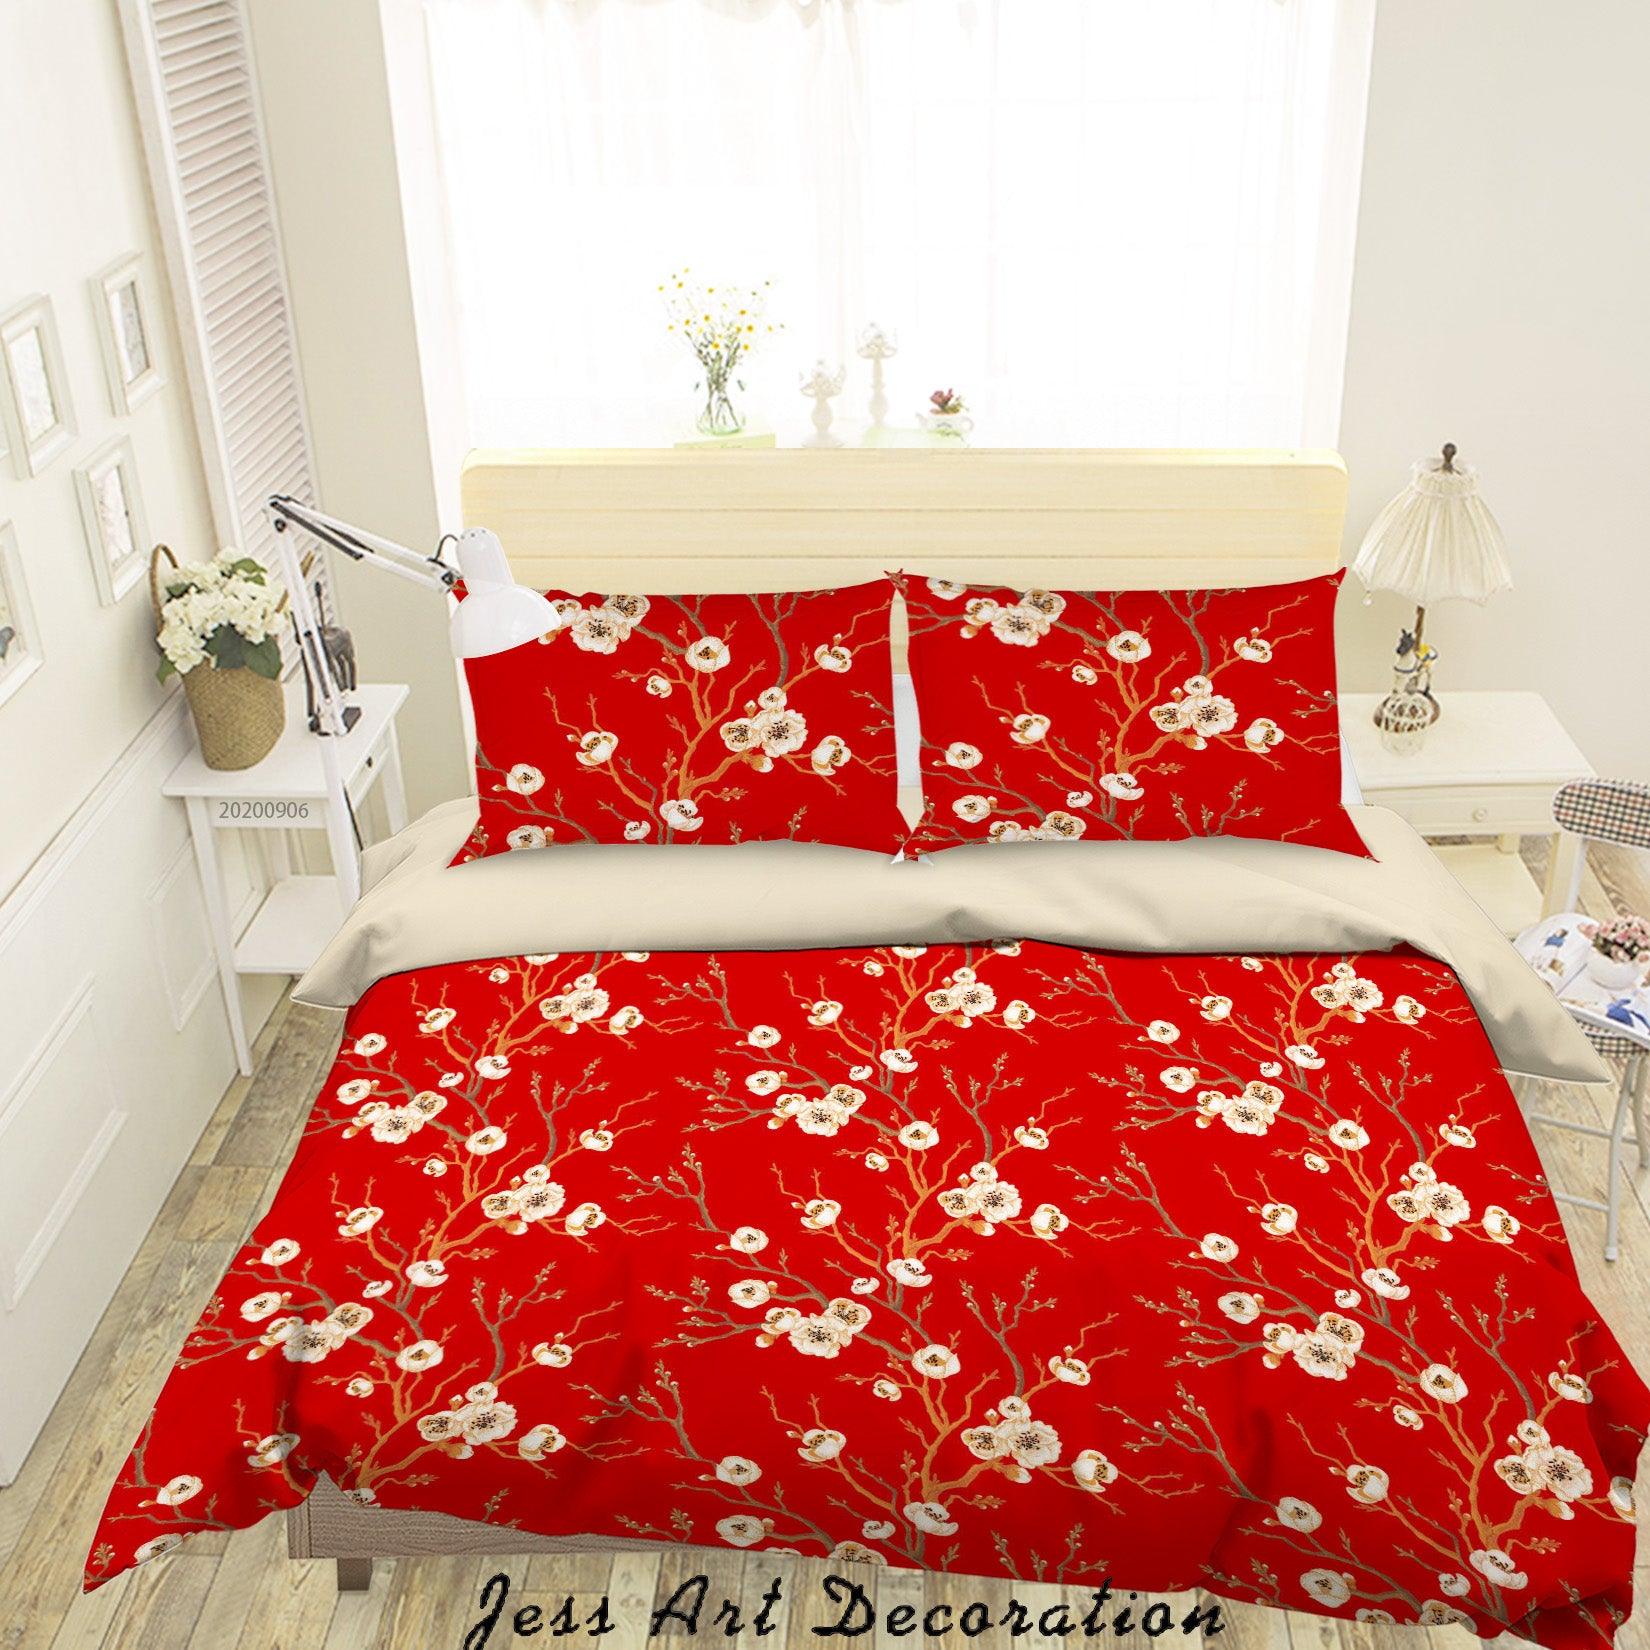 3D Vintage Red Leaves Pattern Quilt Cover Set Bedding Set Duvet Cover Pillowcases WJ 3610- Jess Art Decoration